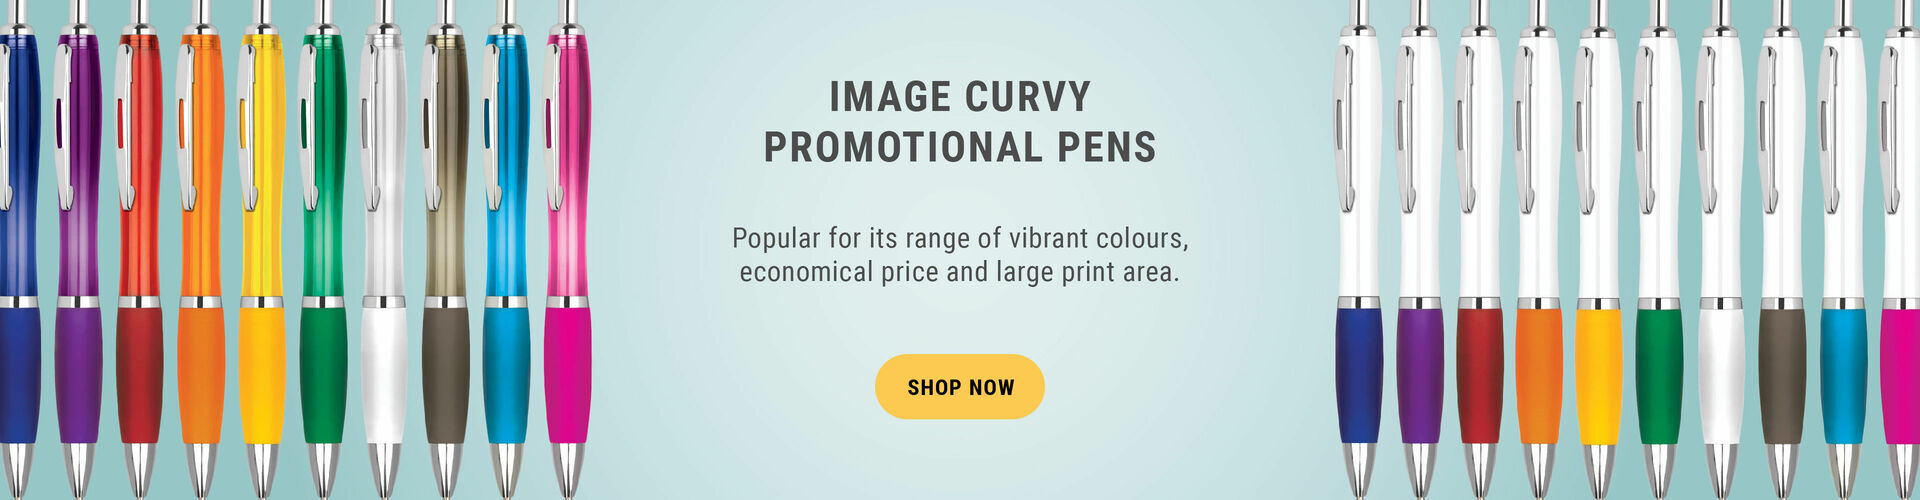 Image curvy promotional pens